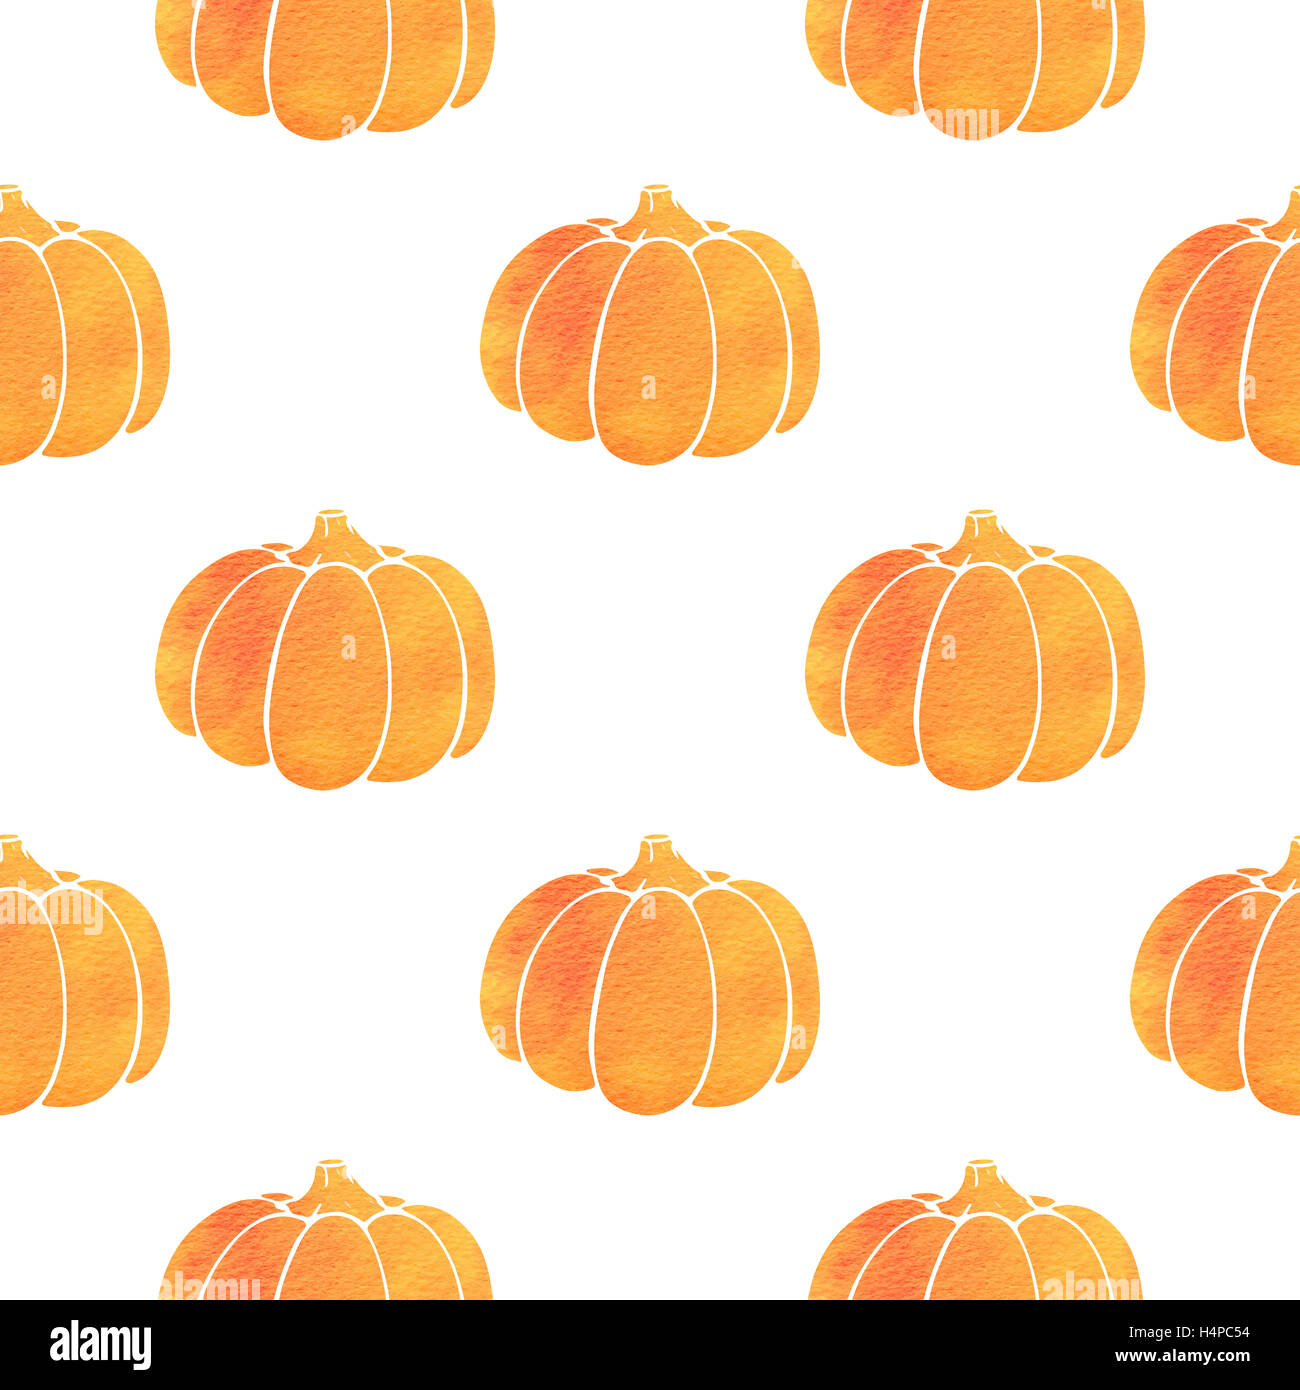 Pumpkin plant Cut Out Stock Images & Pictures - Alamy